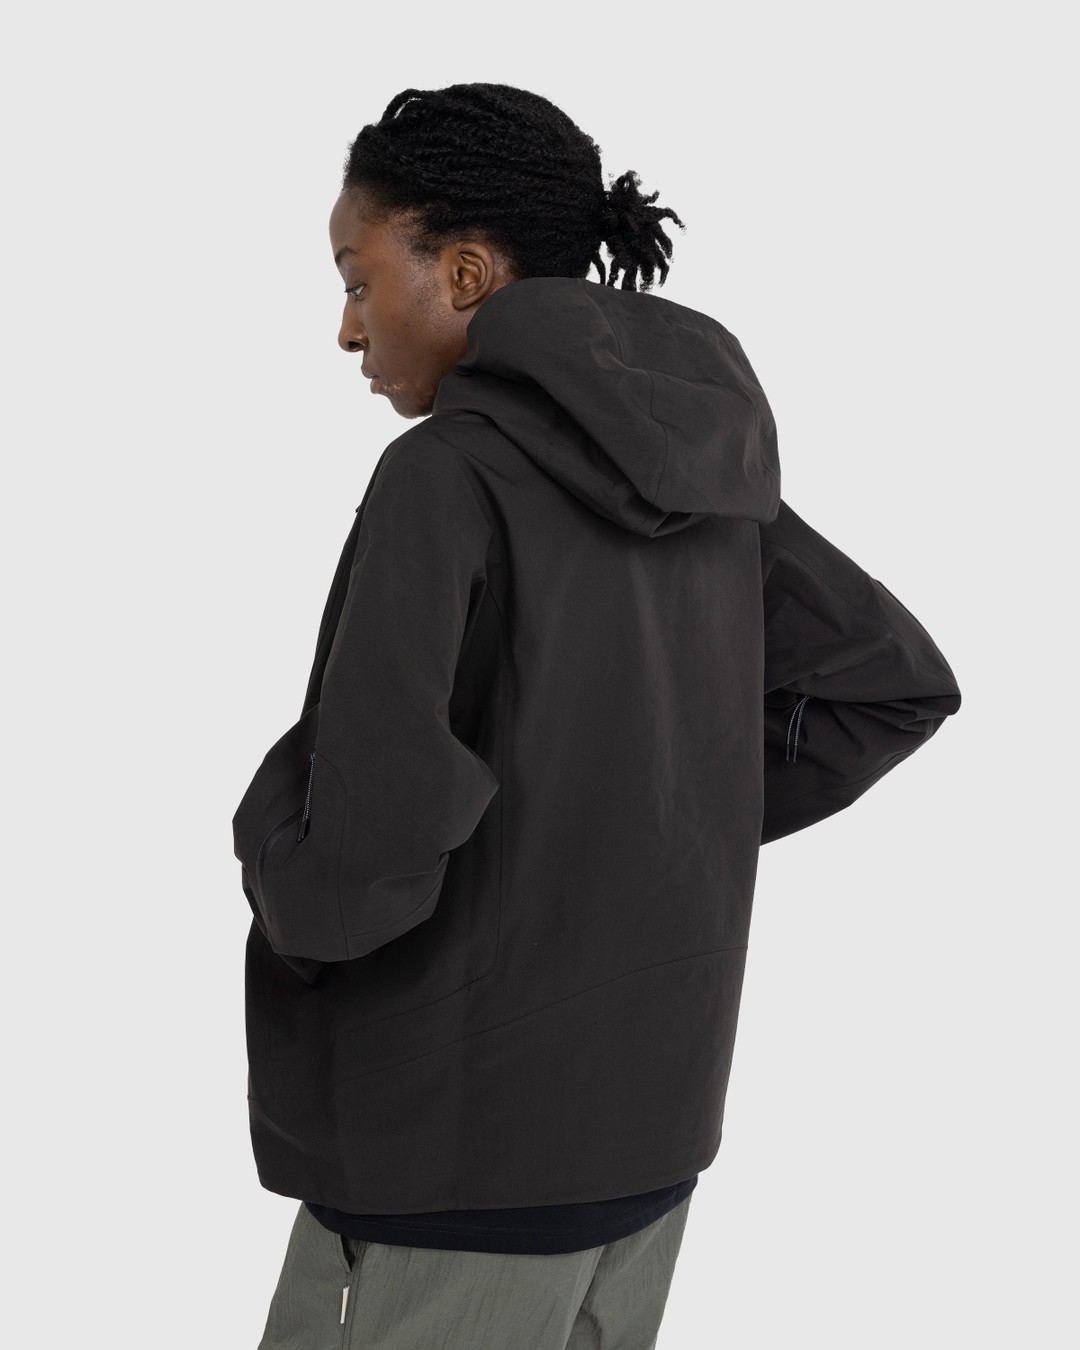 _J.L-A.L_ – Manifold Jacket Black - Outerwear - Black - Image 4